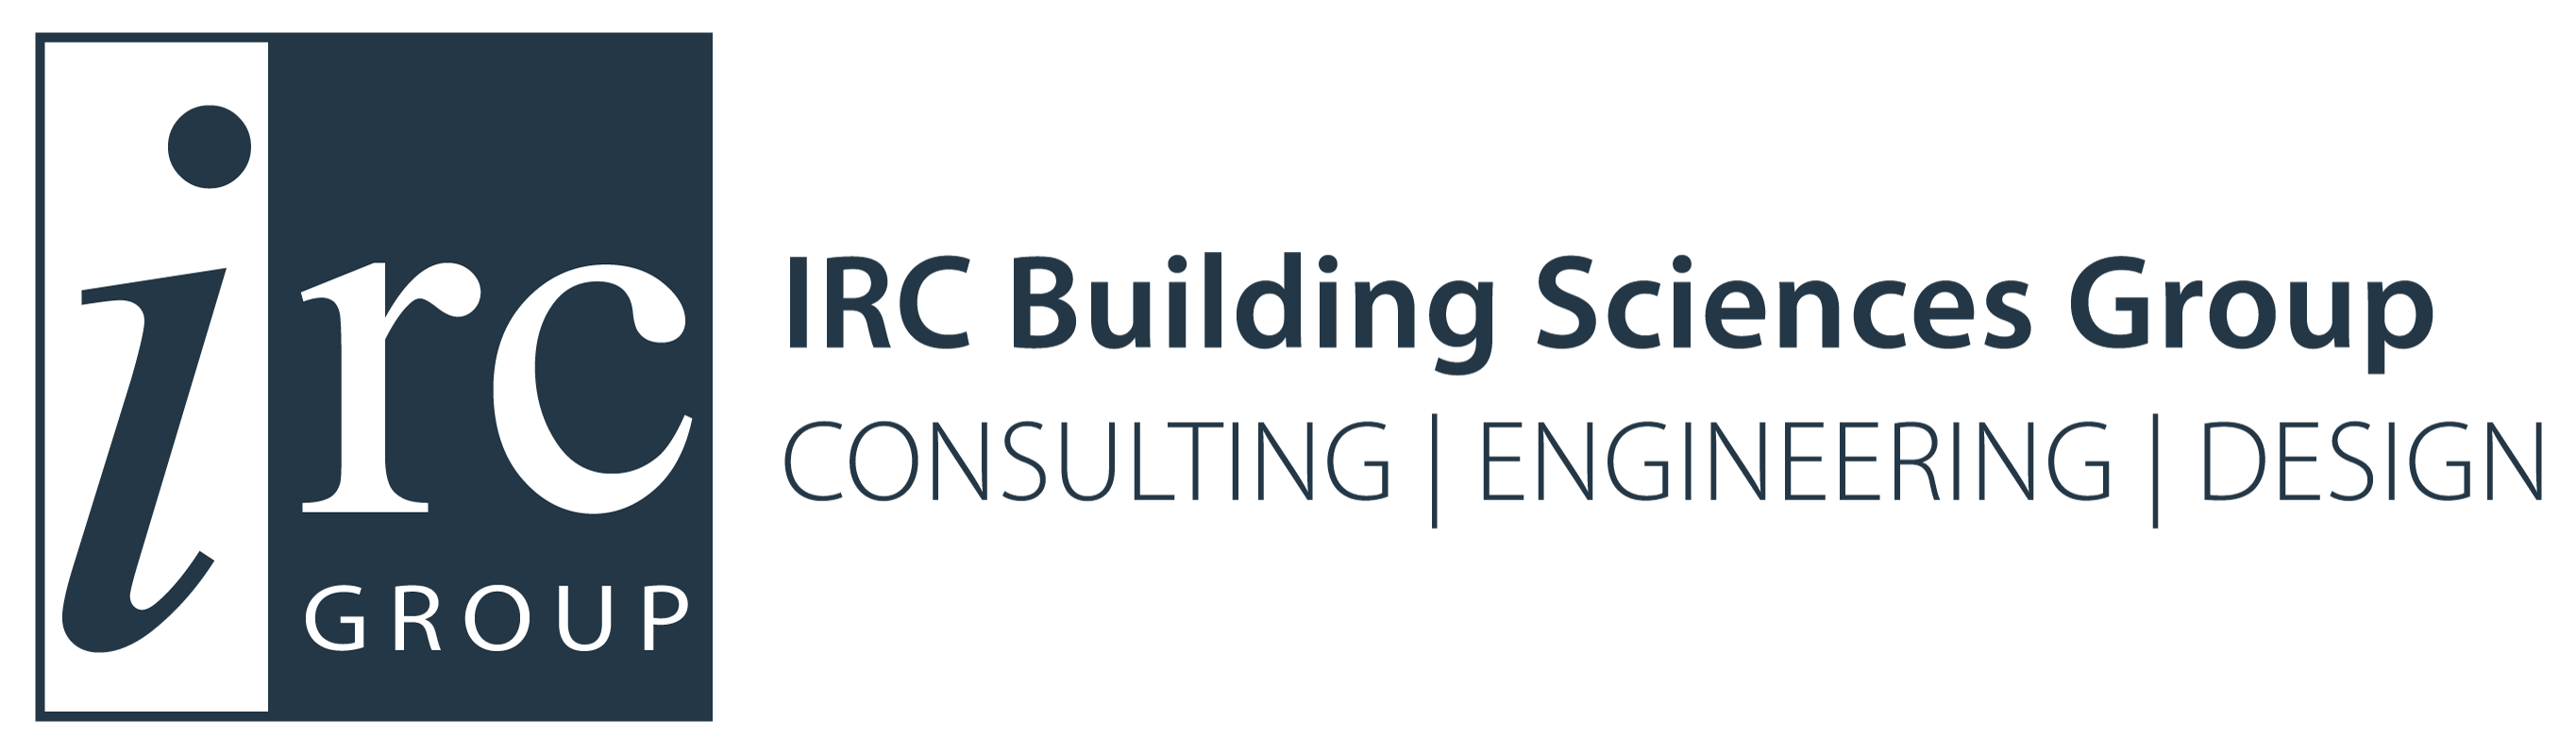 IRC Building Sciences Group